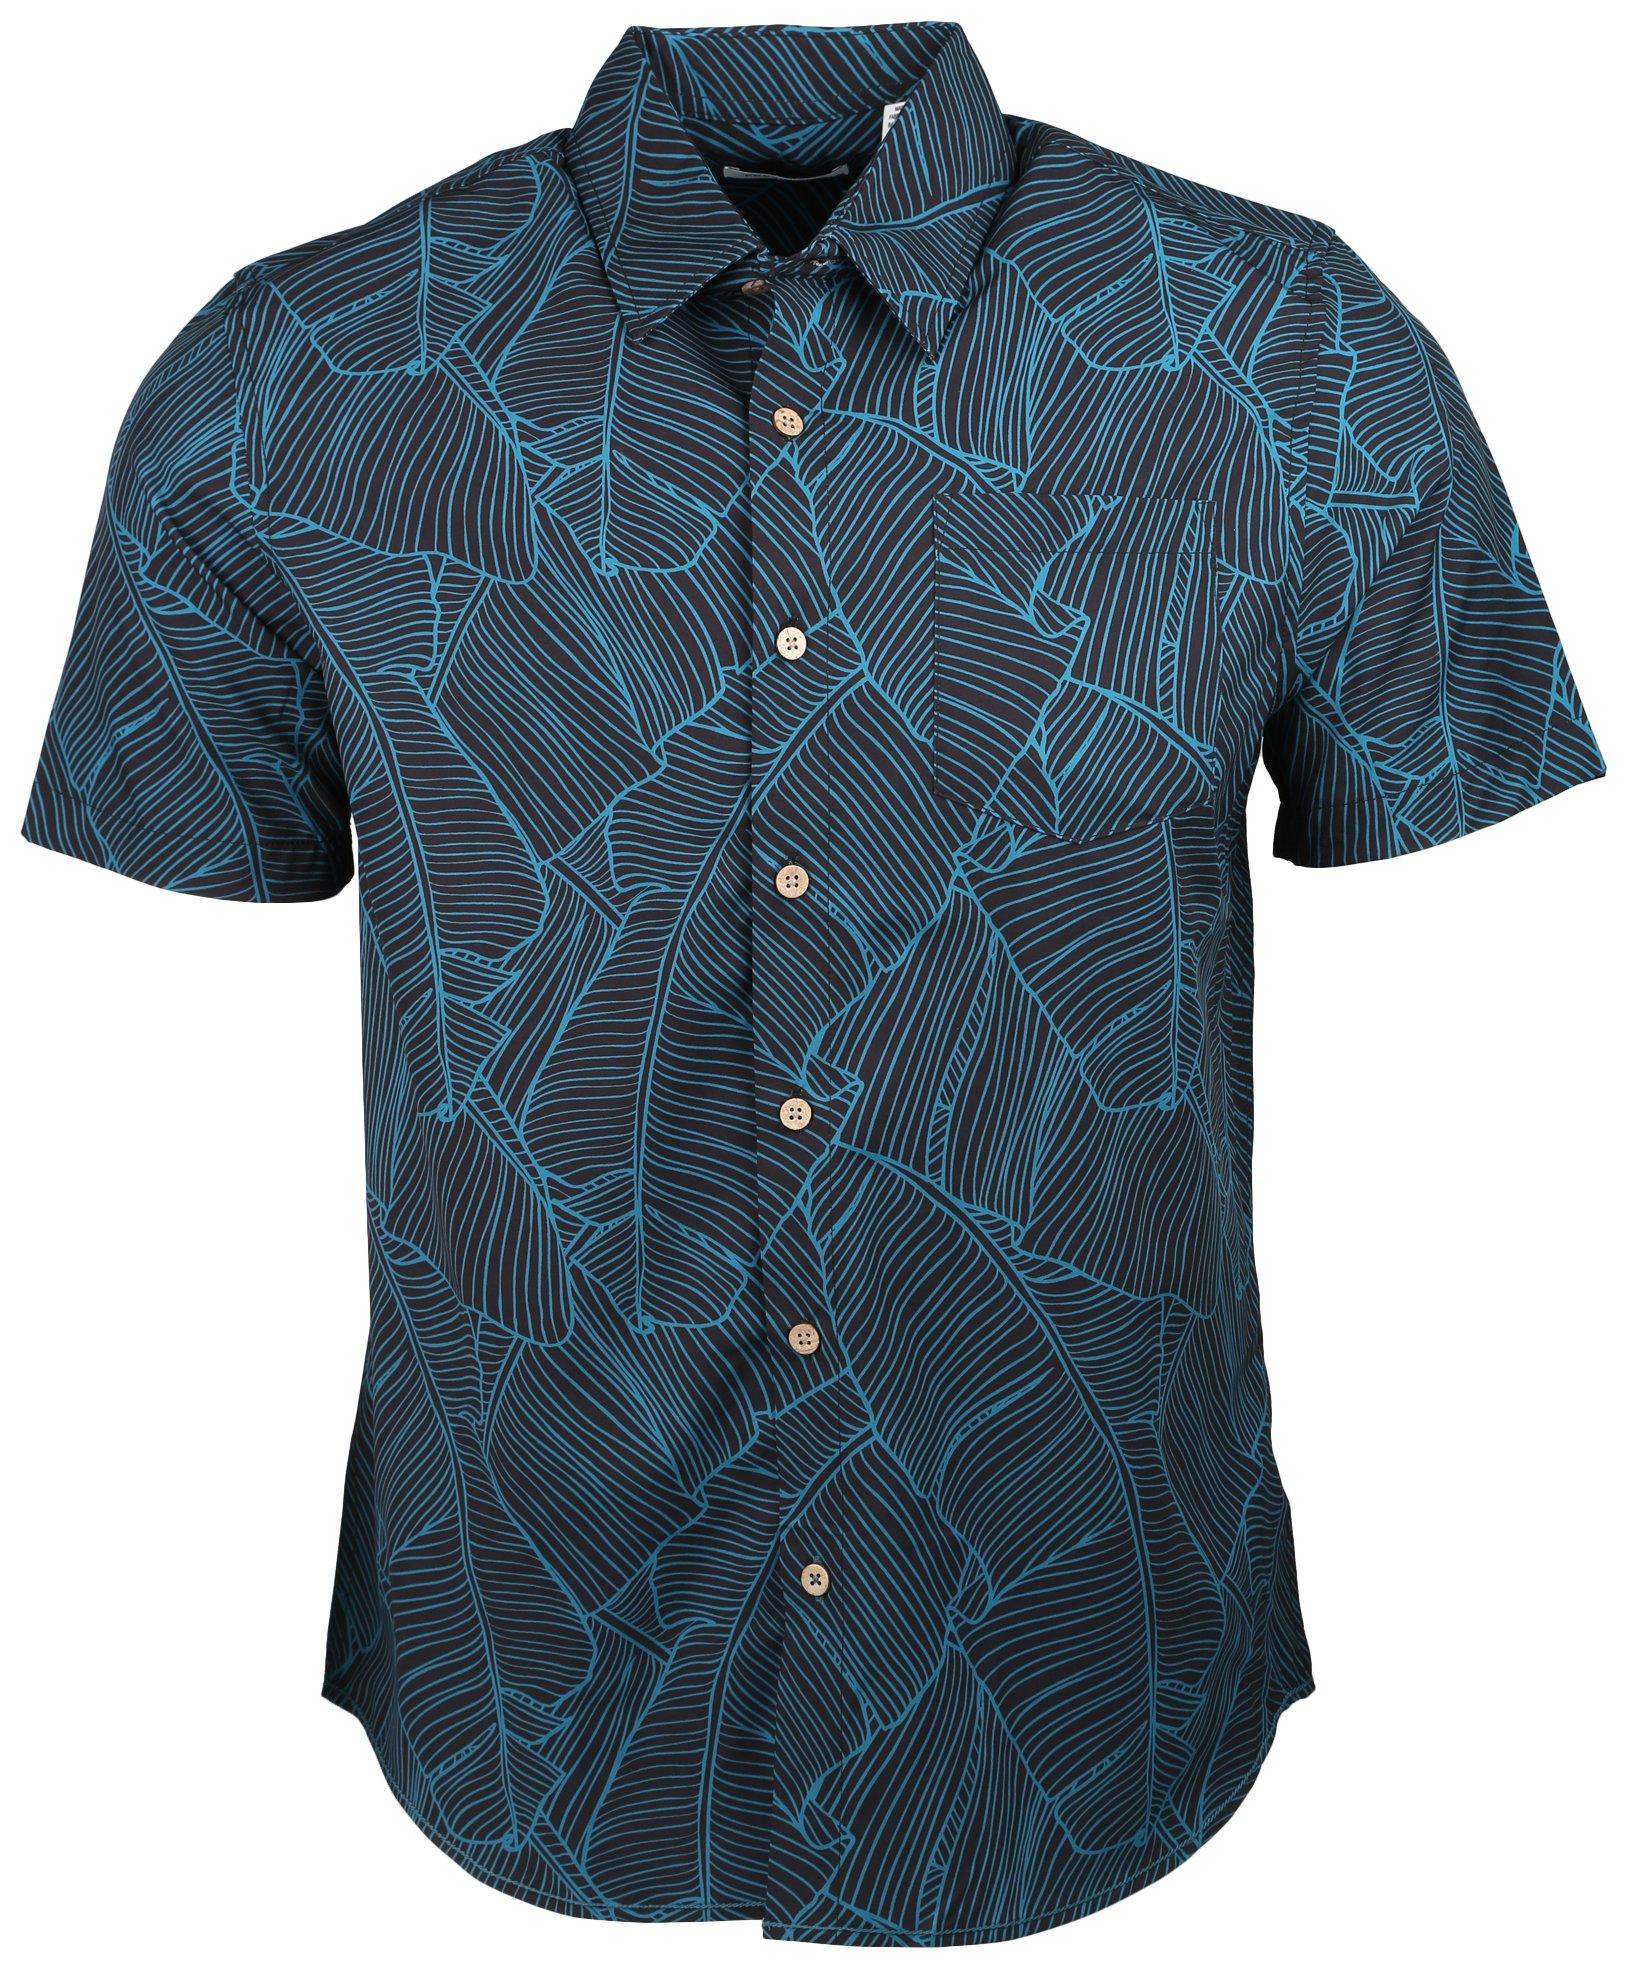 PROJEK RAW Mens Tropical Palm Print Short Sleeve Shirt